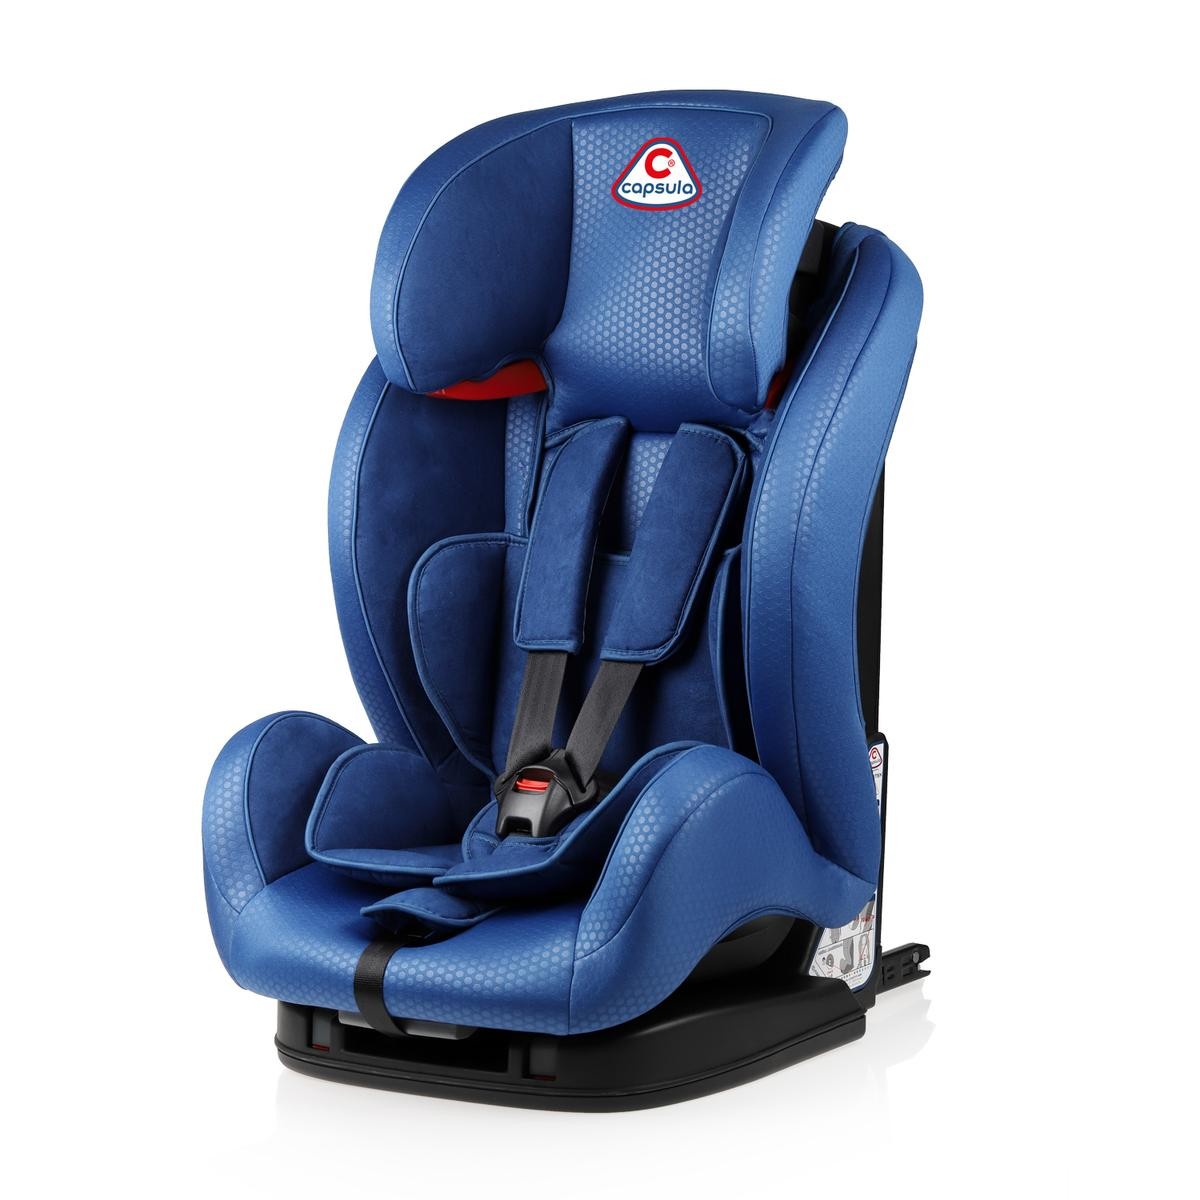 Children's car seat blue capsula MT6X 771140